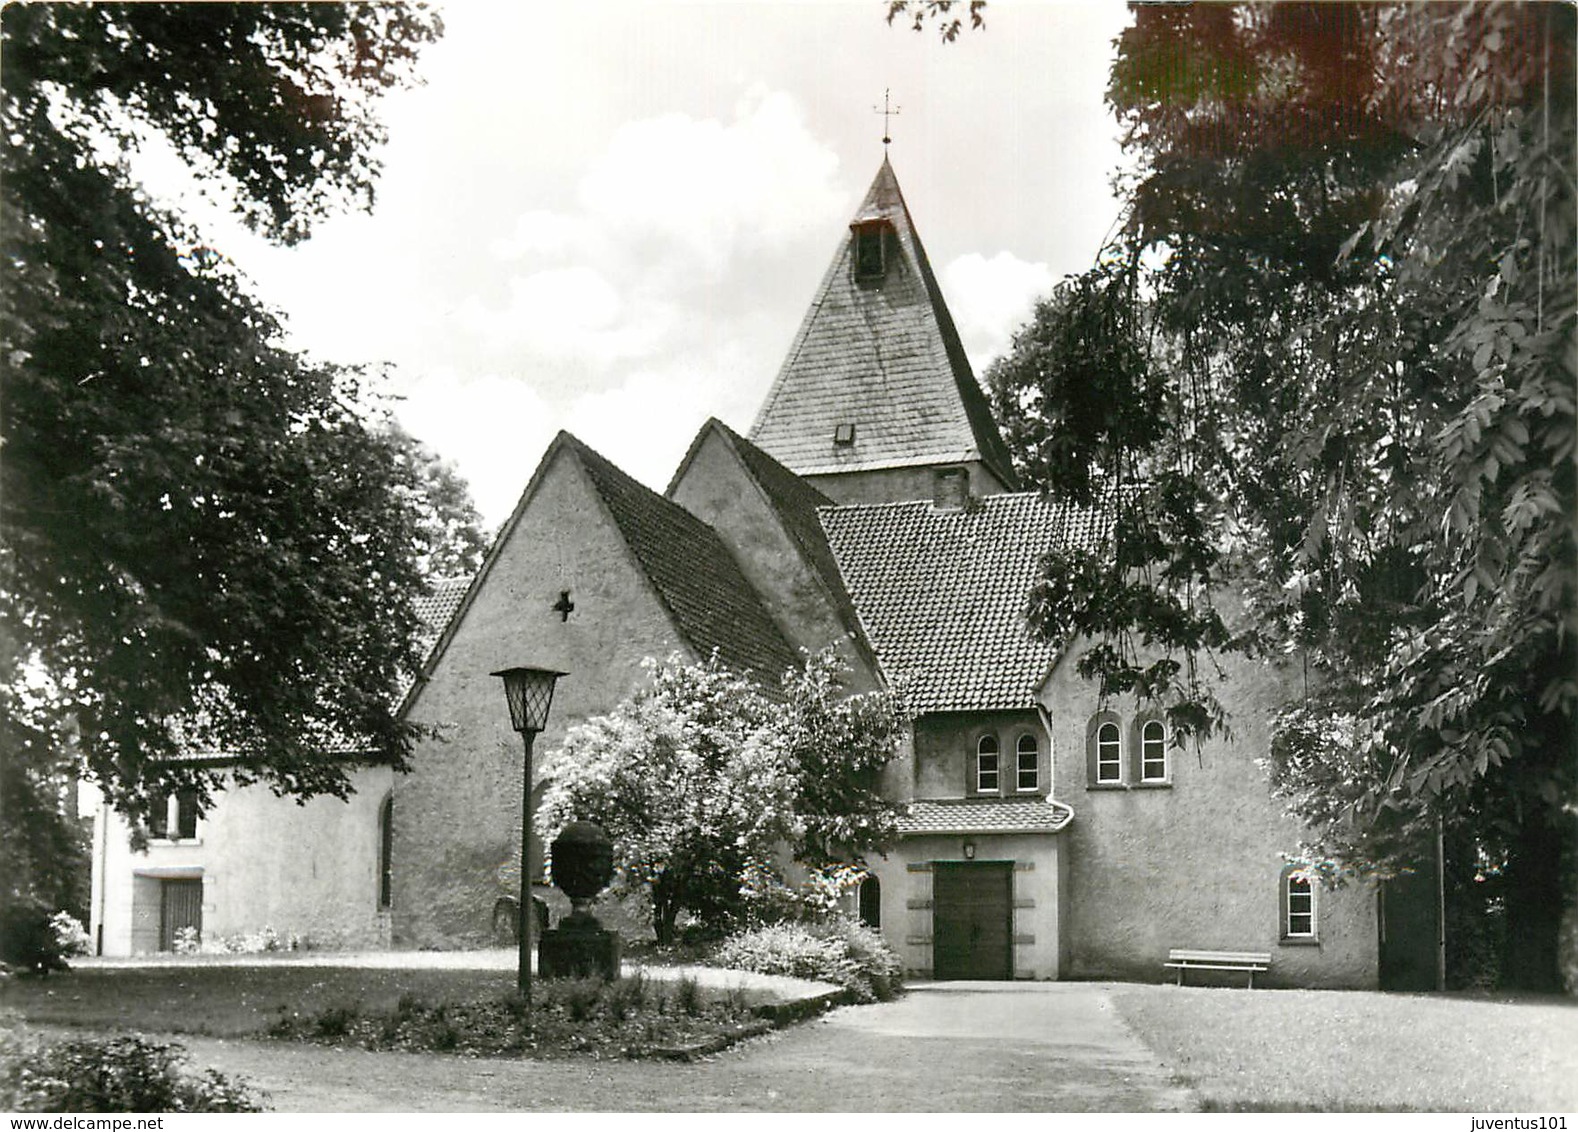 CPSM Bad Meinberg-Evangelische Kirche        L2988 - Bad Meinberg